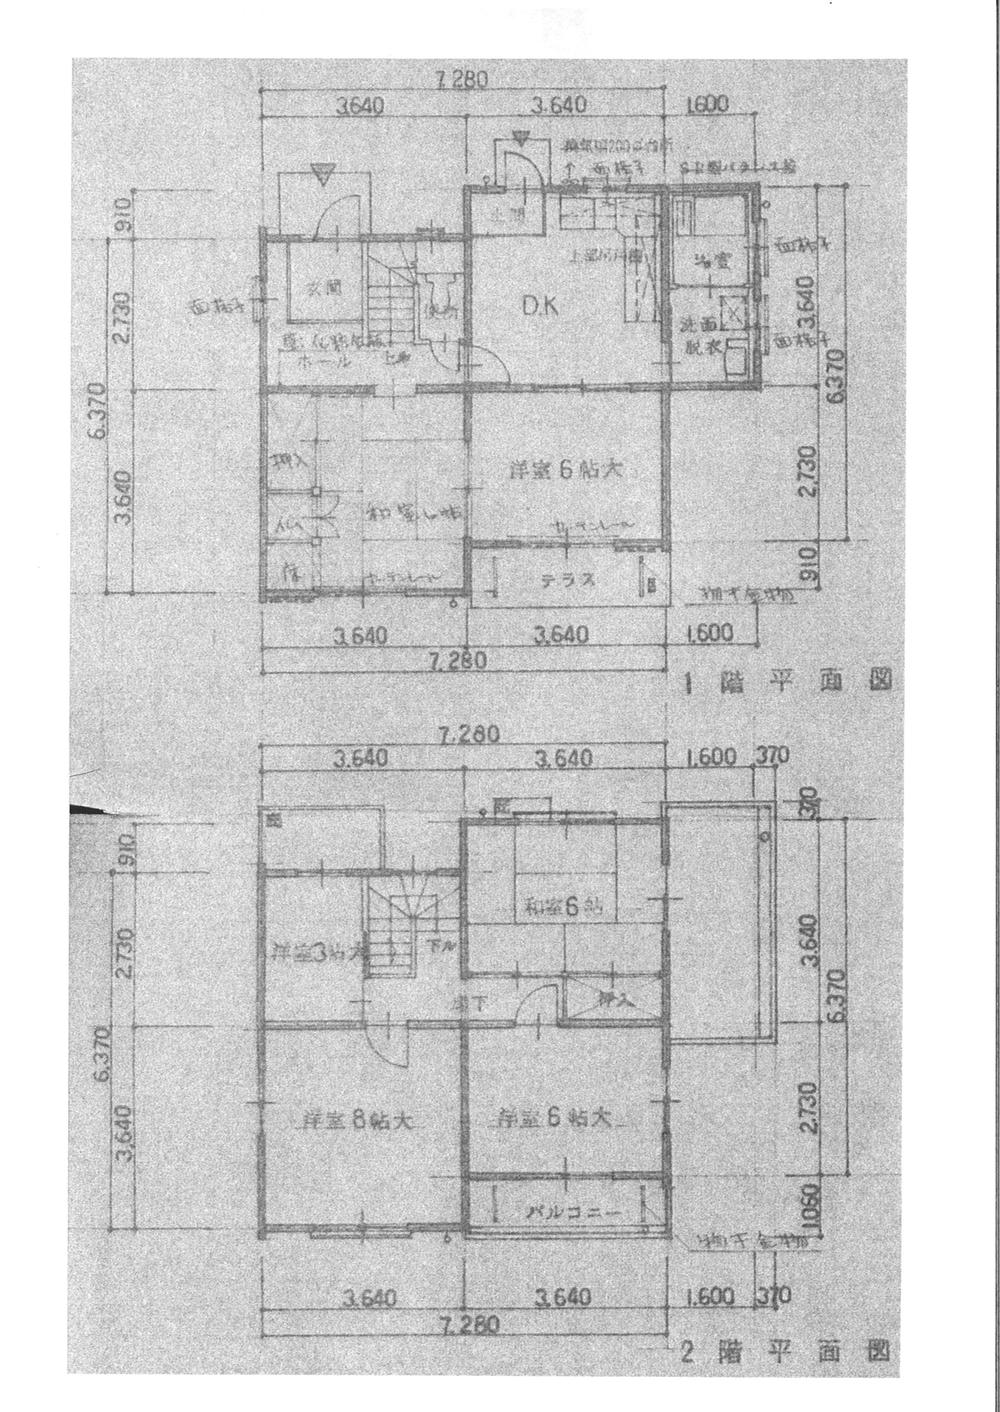 Floor plan. 14.8 million yen, 4LDK + S (storeroom), Land area 255.81 sq m , Building area 98.56 sq m